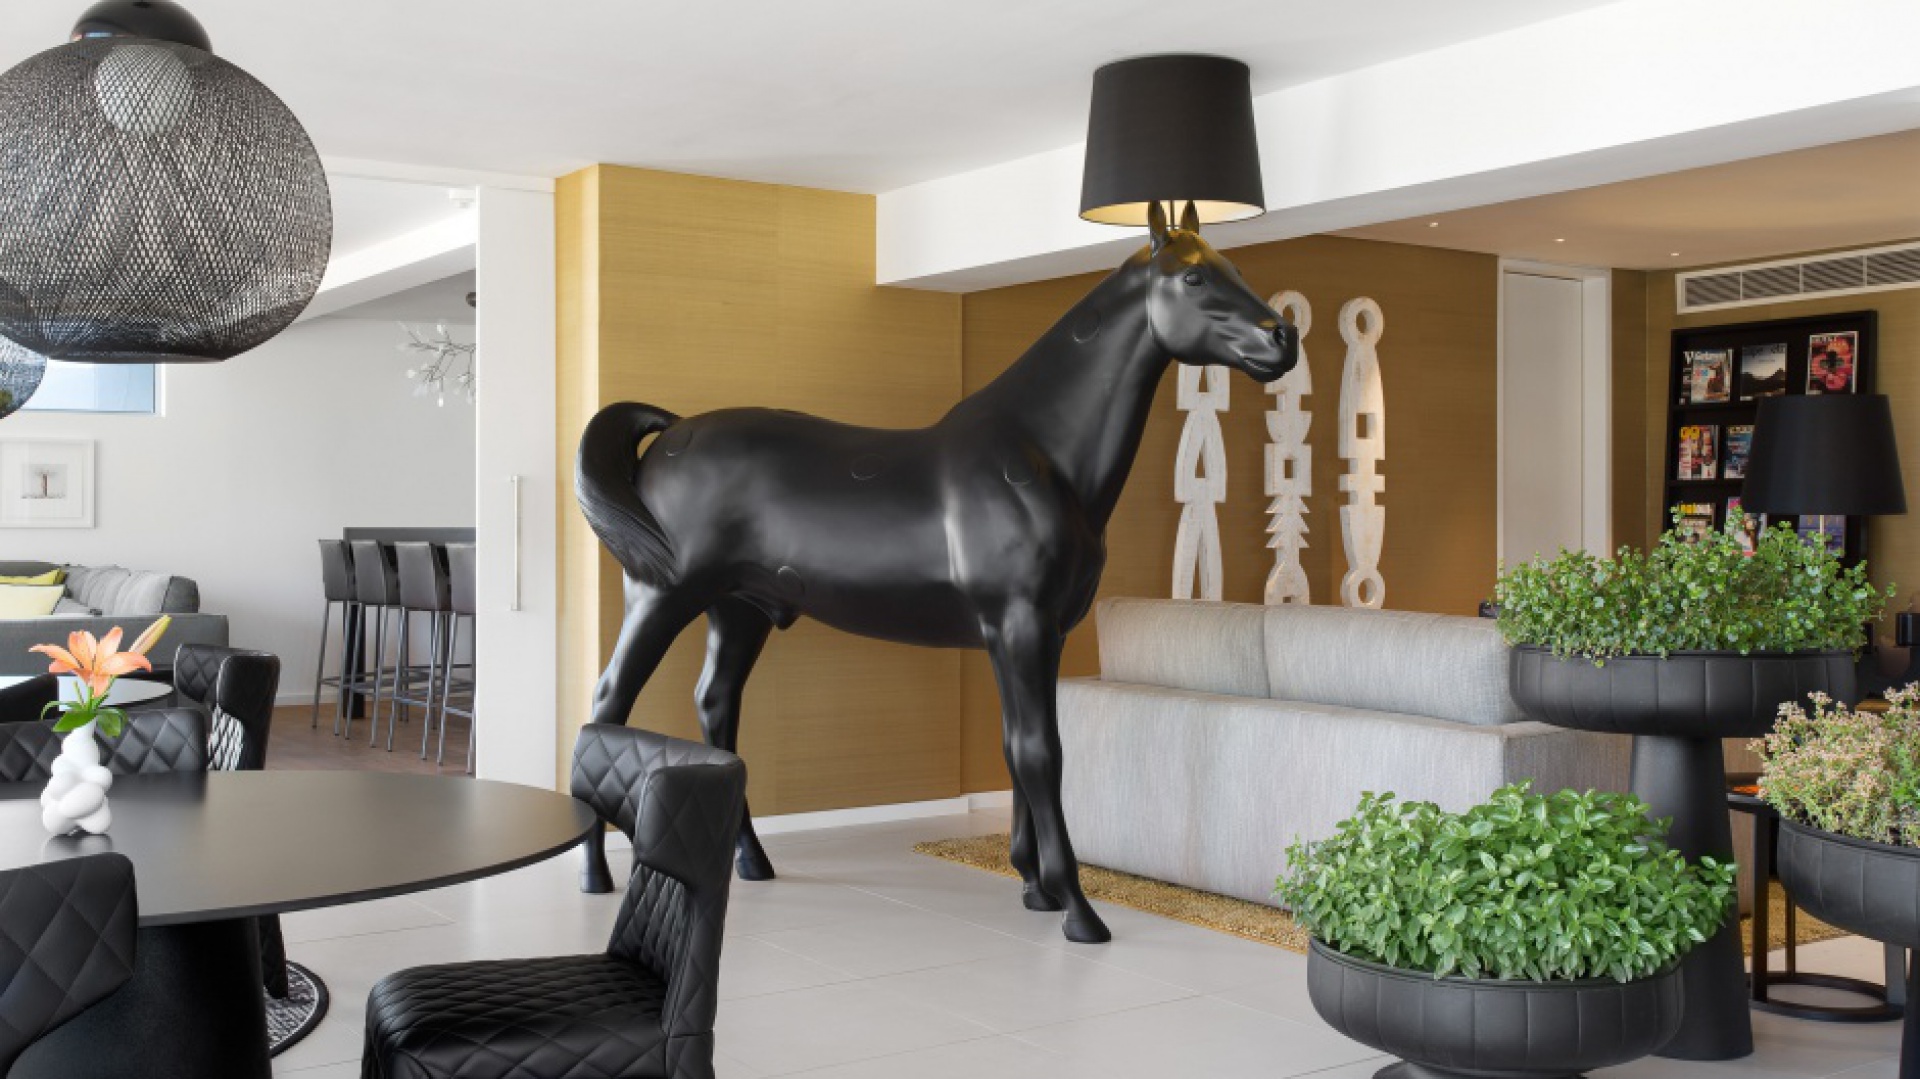 Lampa Horse, projekt Front. Fot. Moooi / Adam Letch